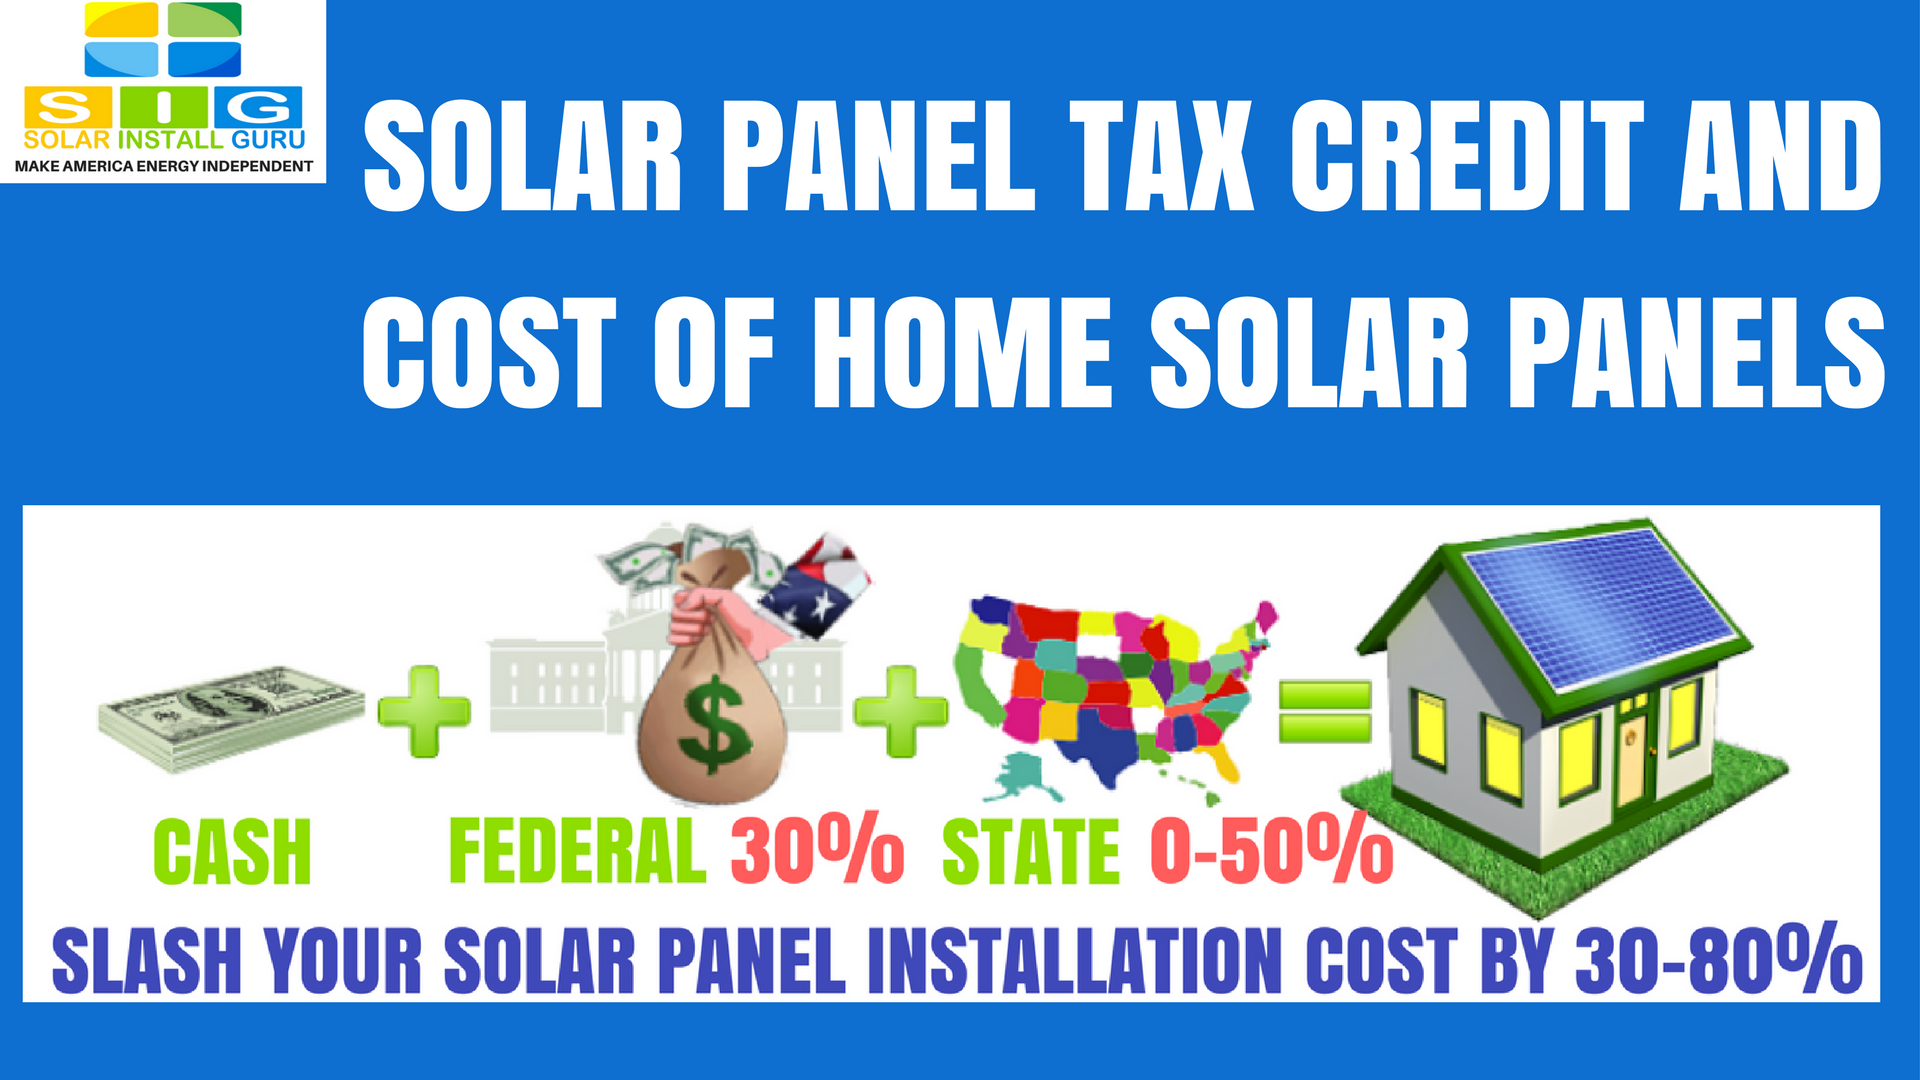 Solar Panel Tax Credit And Home Solar Panels SOLAR Install GURU Blog